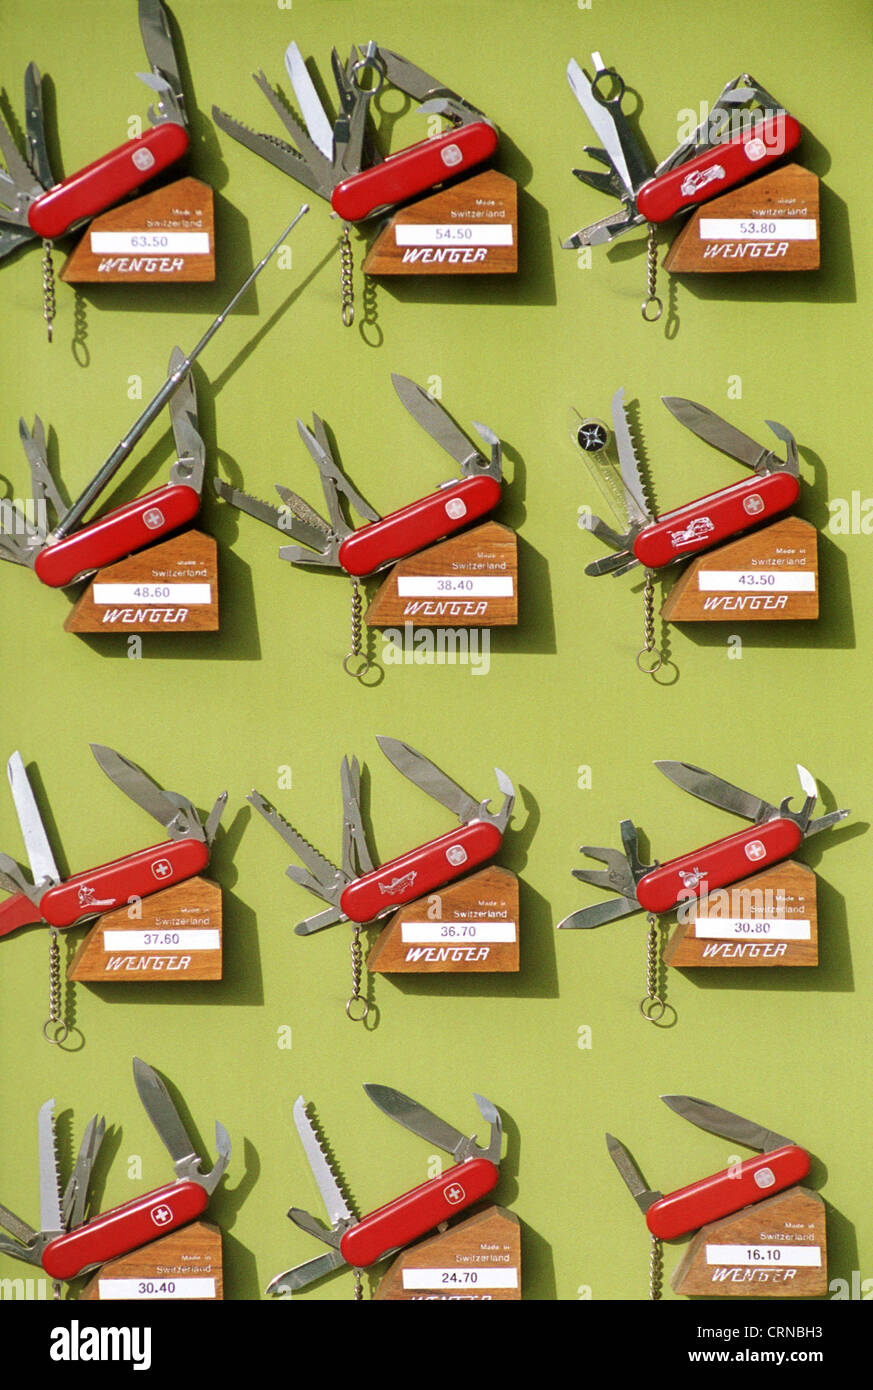 Wenger Swiss Army Knife Company, Switzerland Stock Photo - Alamy